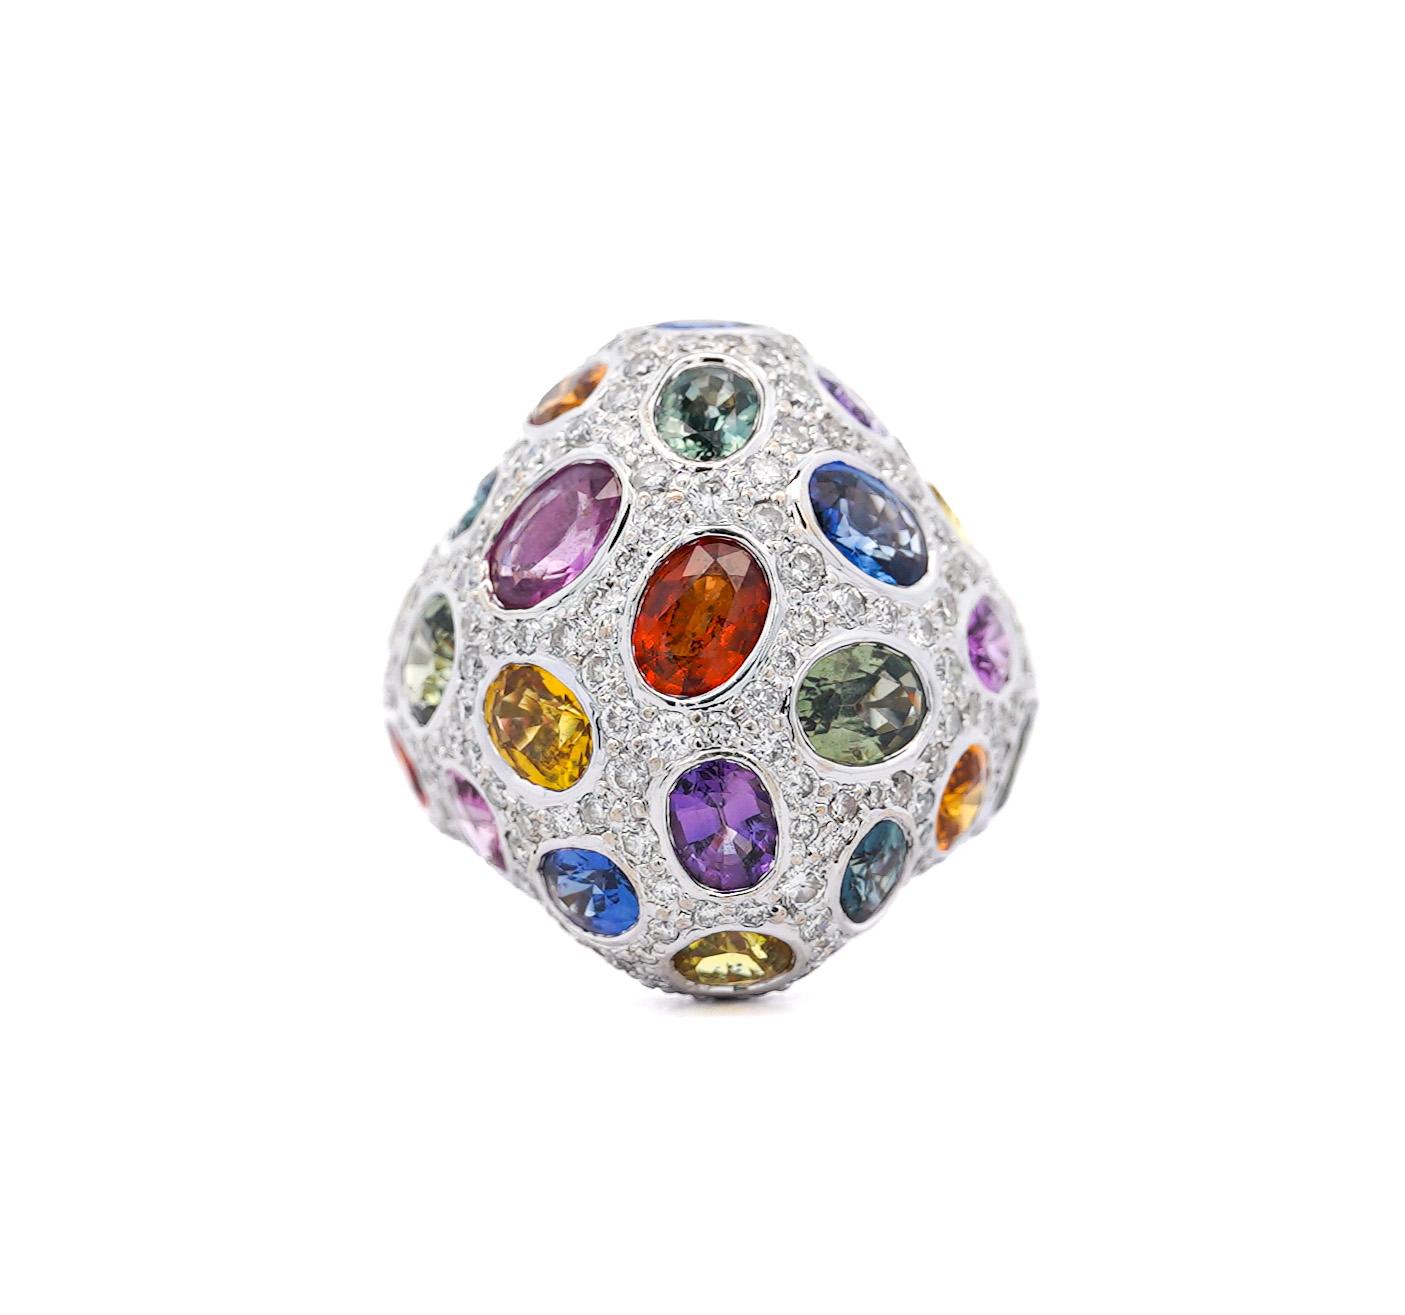 9.31 CTTW Mixed Color Sapphire, Amethyst, Garnet, Diamond Cluster Ring